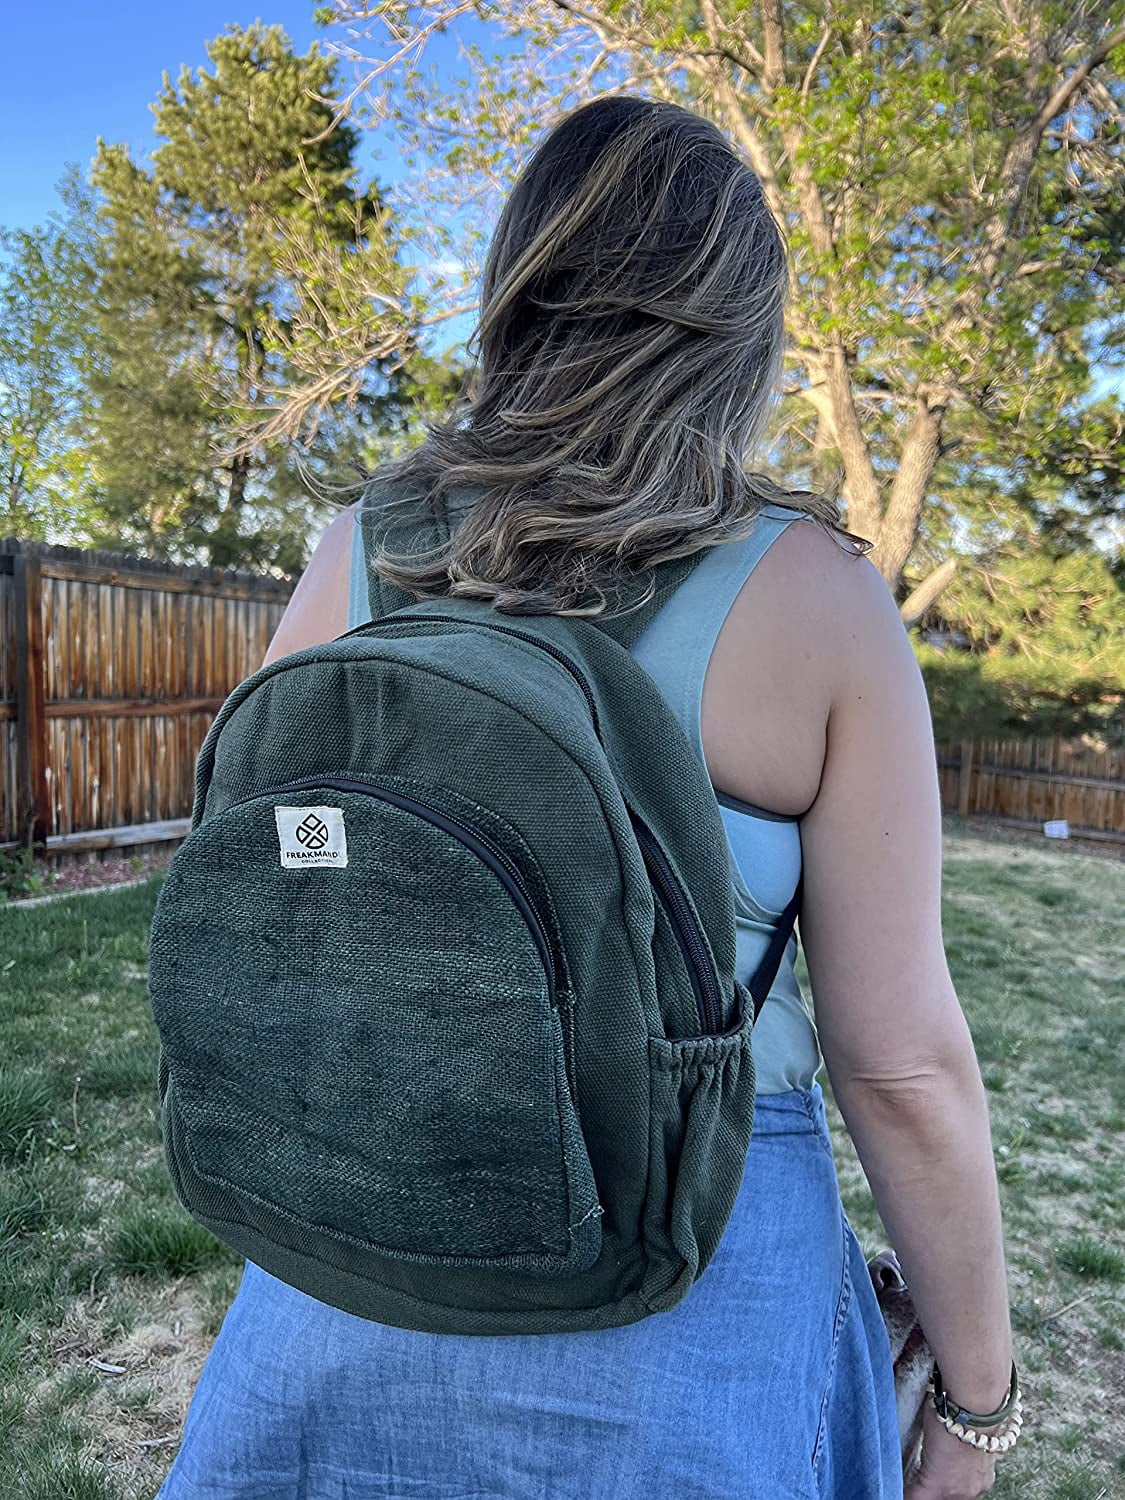 100% Hemp Bag-Original Hemp Bag-Unique Design Hemp Bag-Hemp Backpack for  Gift | eBay